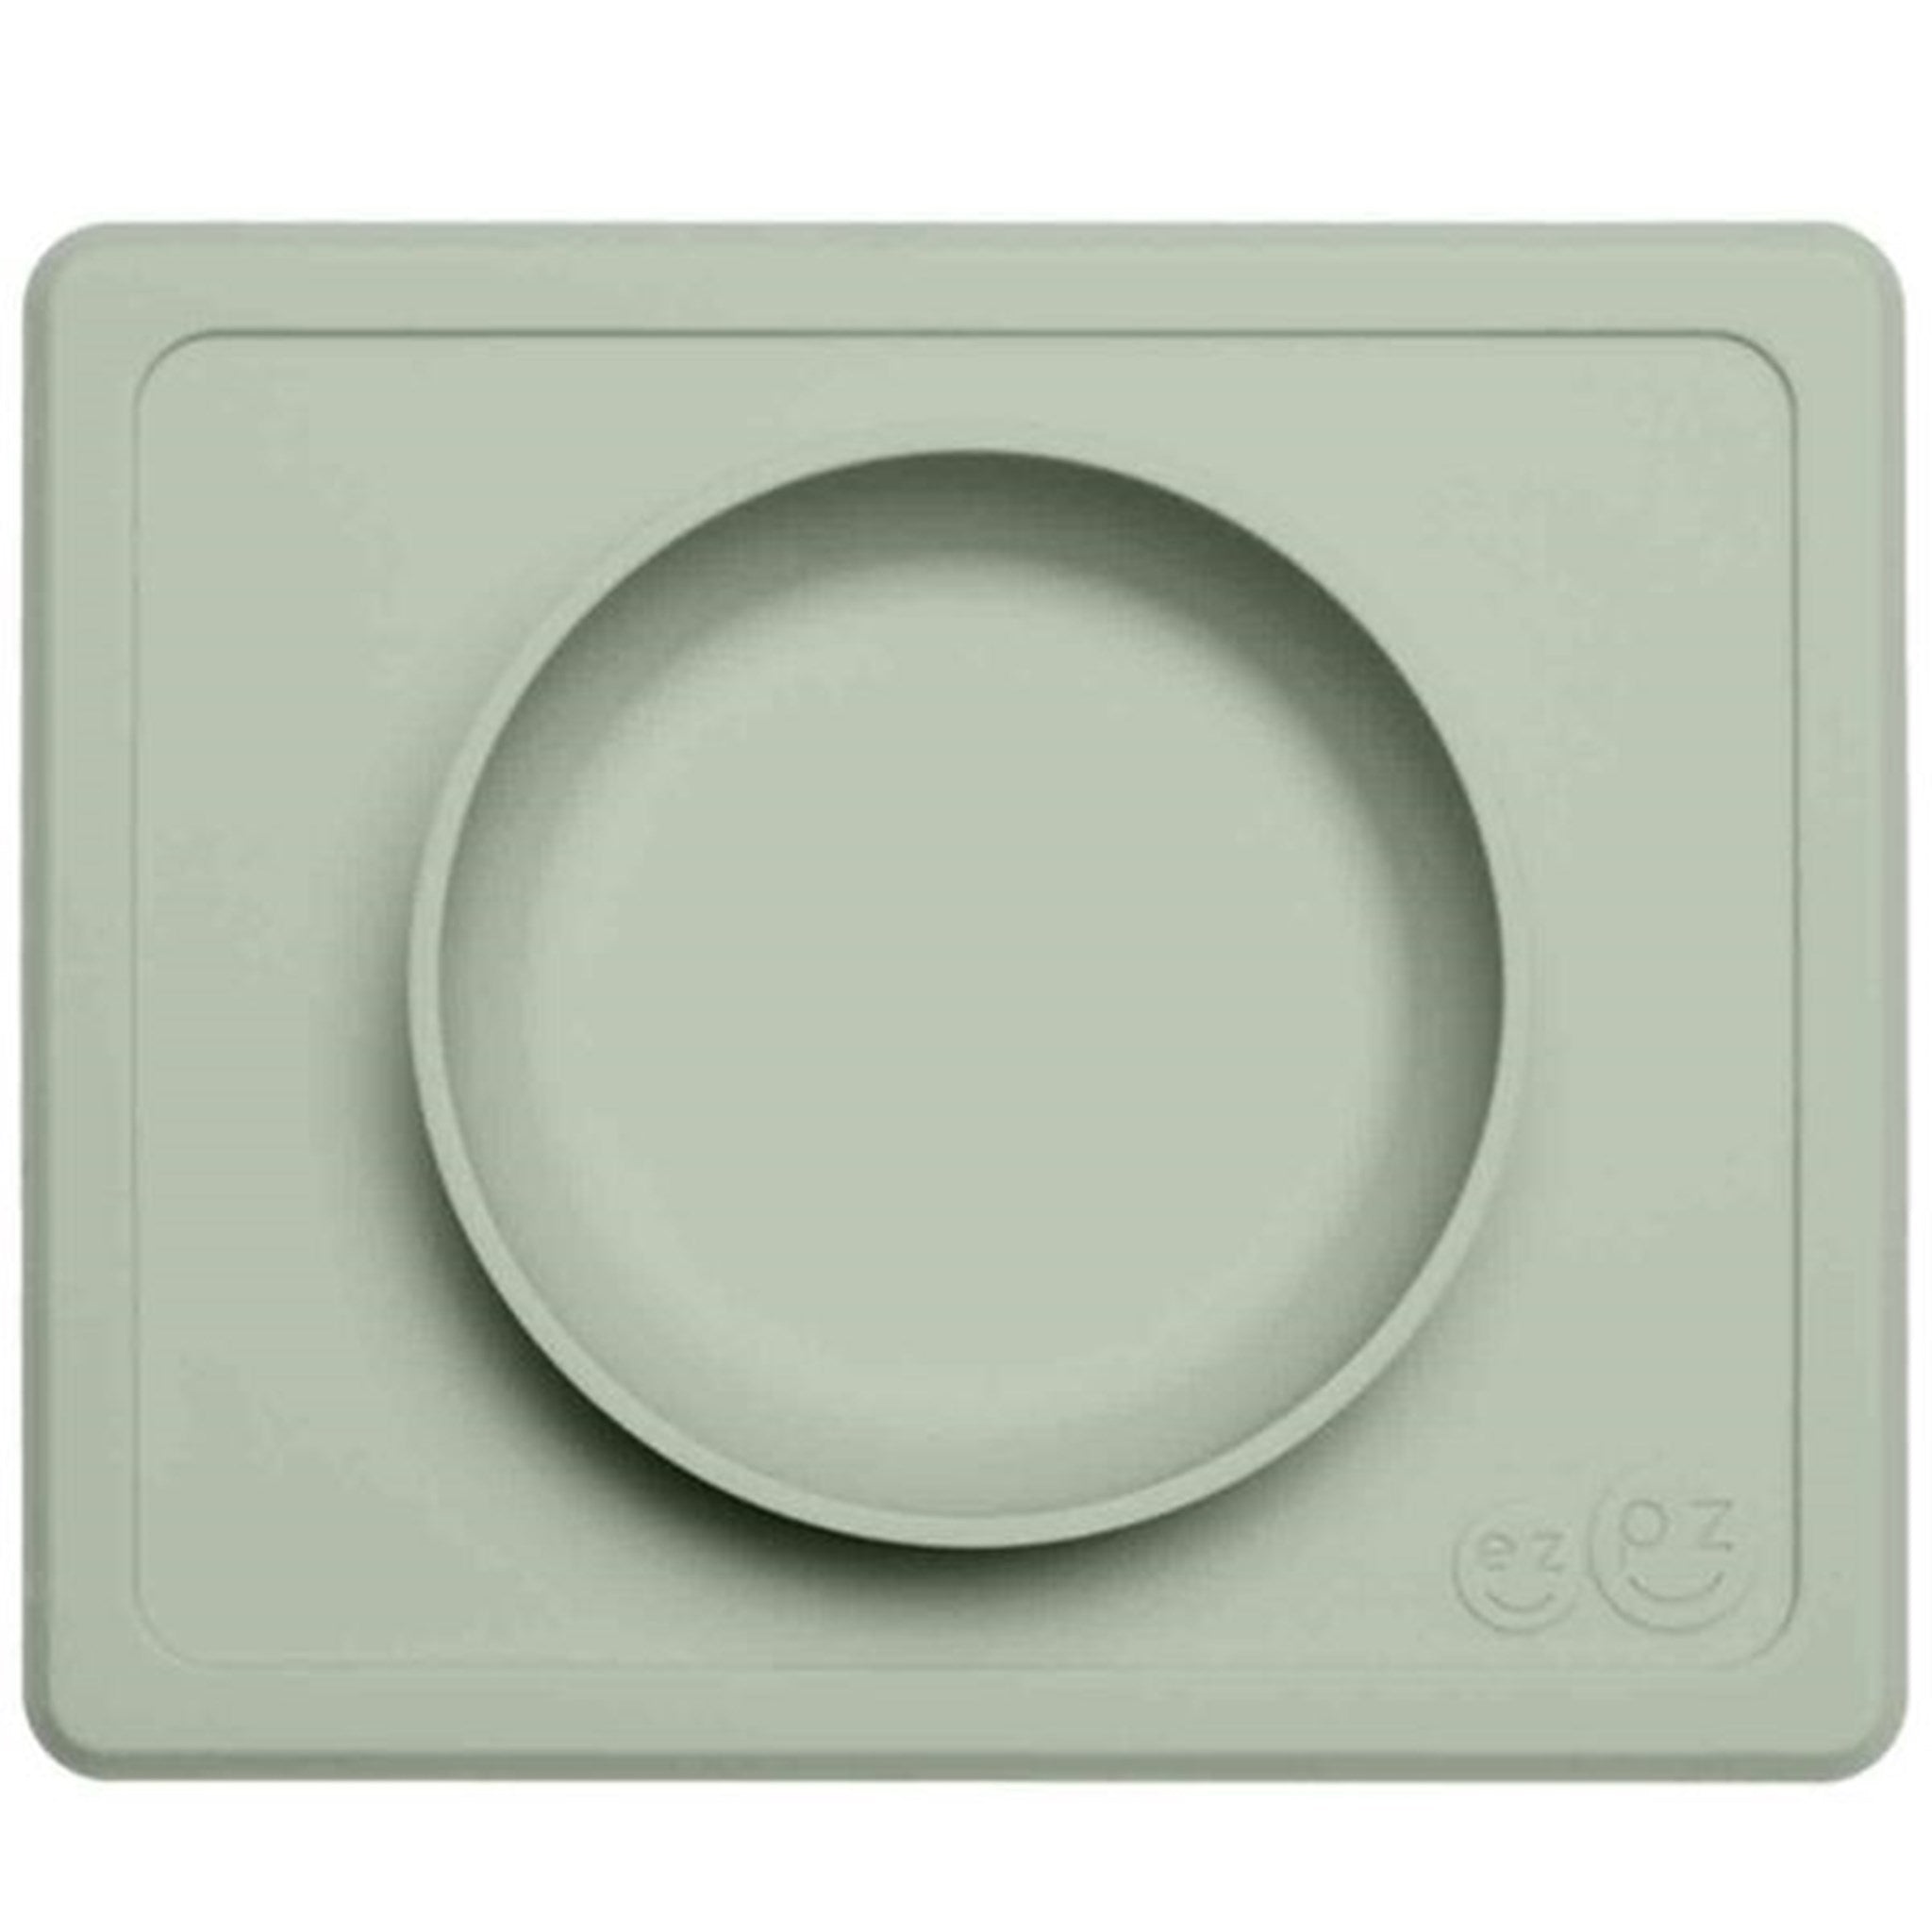 EZPZ Happy Mini Bowl Placemat + Bowl in One Green